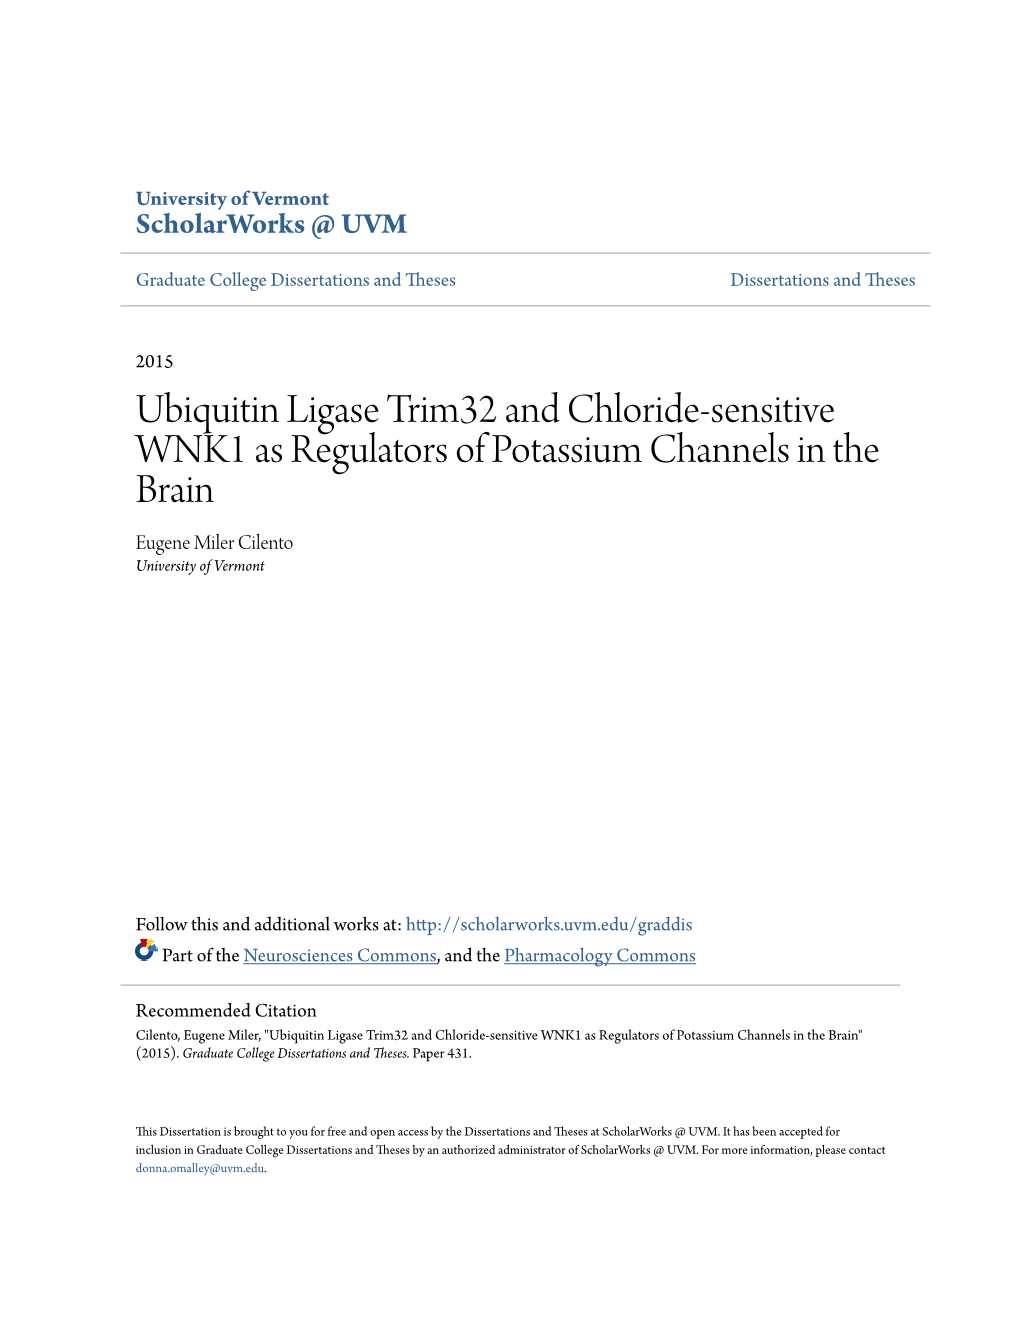 Ubiquitin Ligase Trim32 and Chloride-Sensitive WNK1 As Regulators of Potassium Channels in the Brain Eugene Miler Cilento University of Vermont